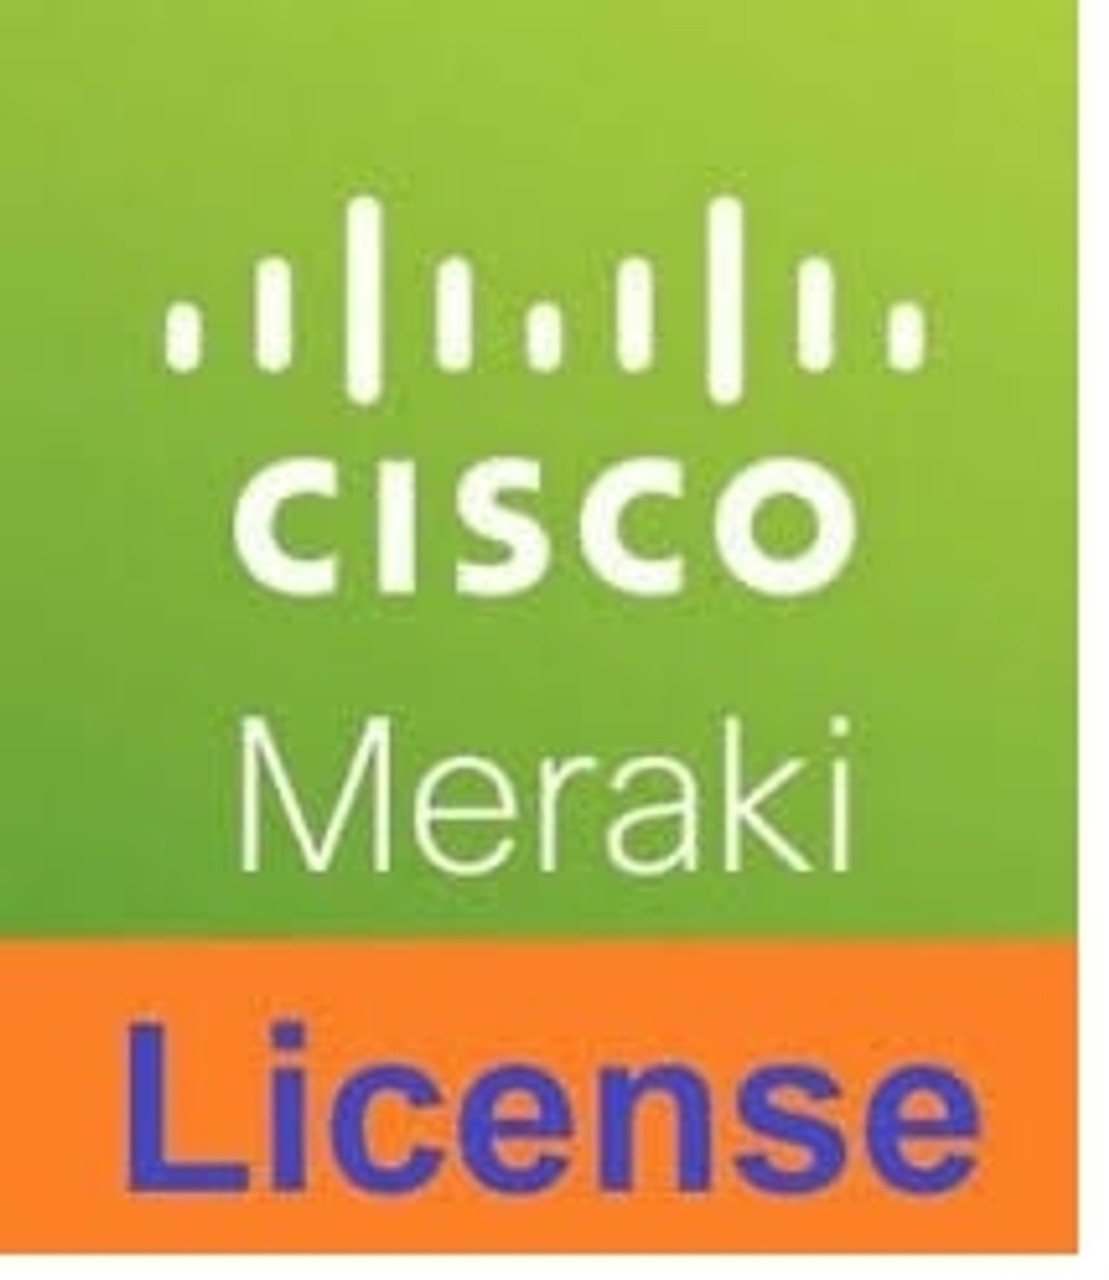 Meraki MS225-24 Enterprise License and Support, 5 Year